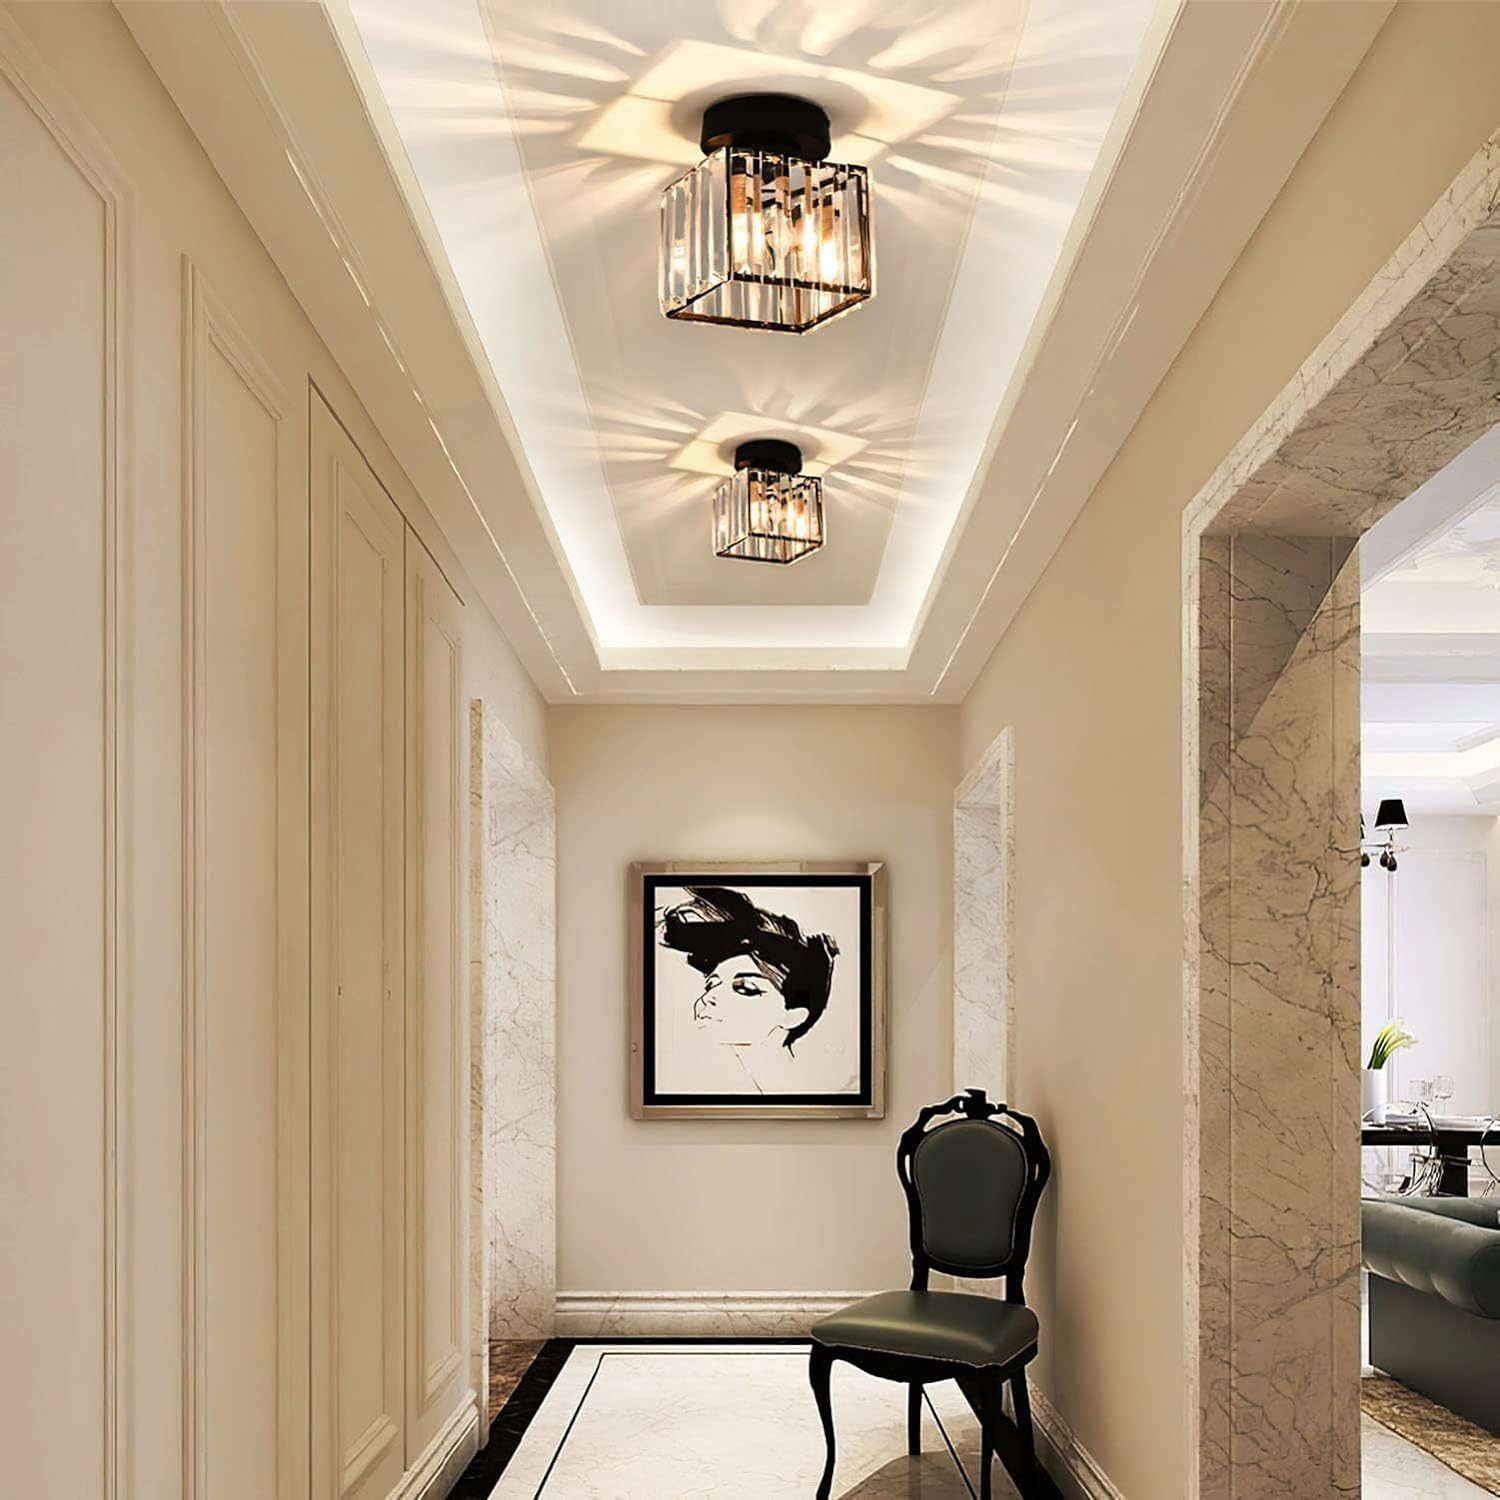 Modern 1-Light Black Hallway Ceiling Light